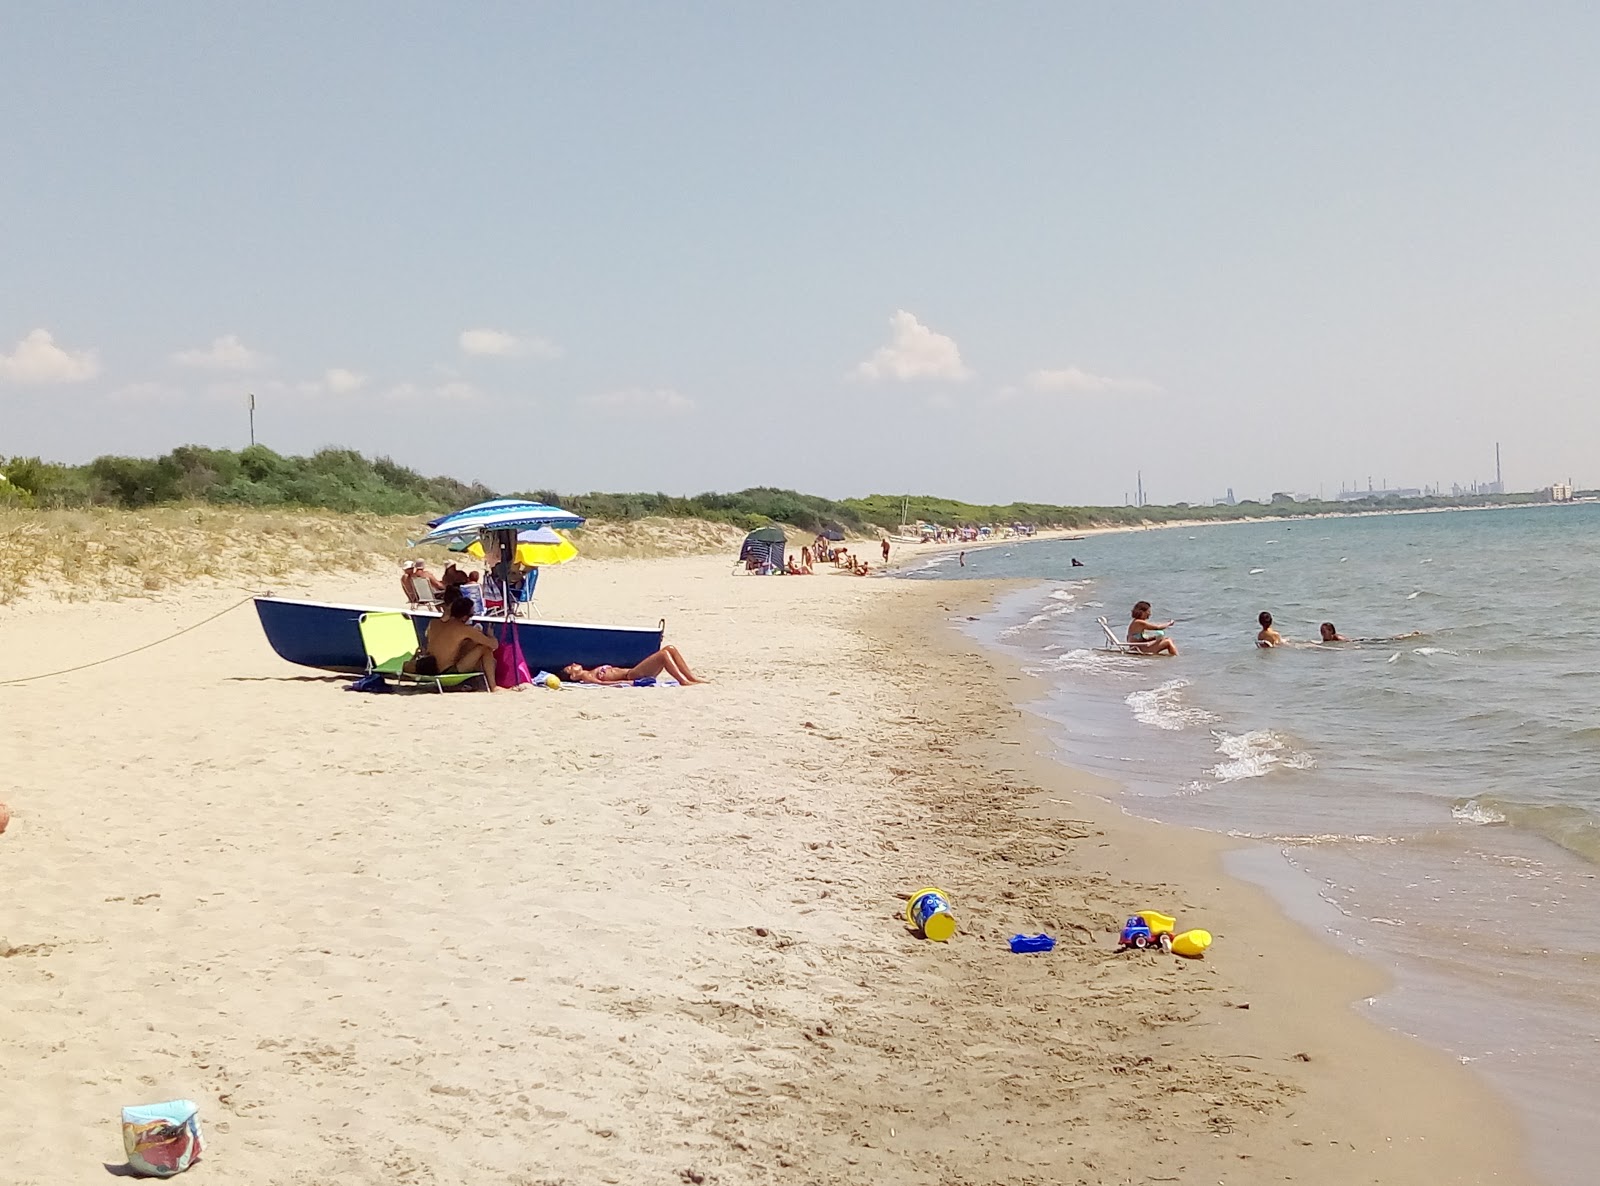 Foto av Spiaggia di Verde Mare med brunsand yta